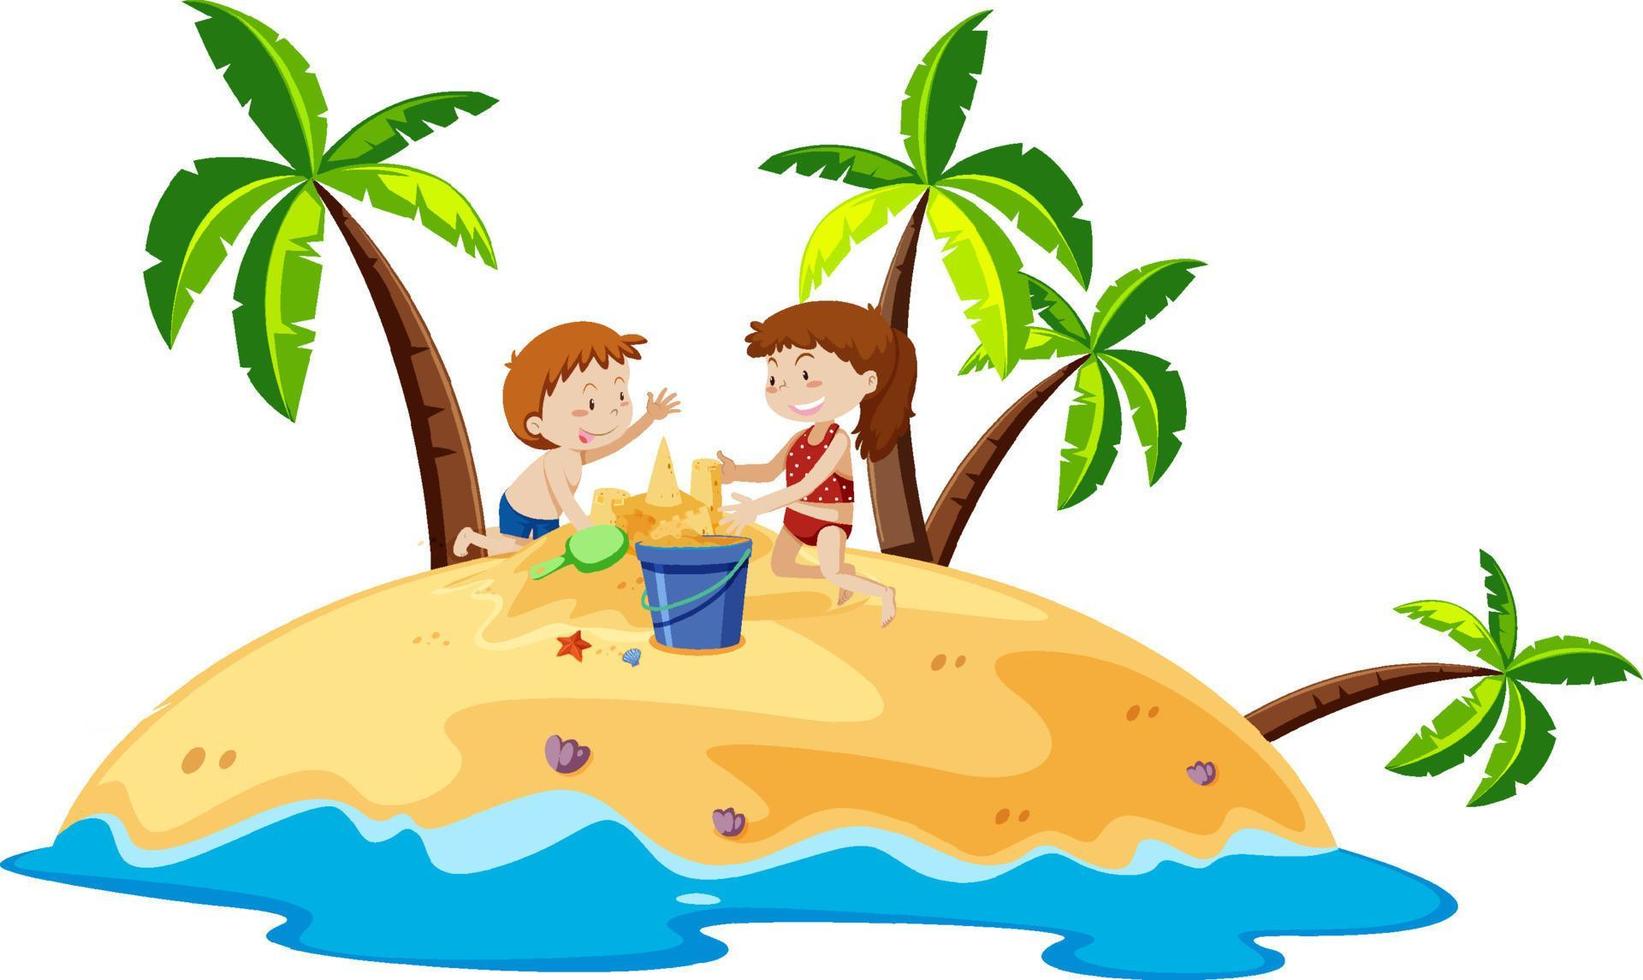 Kids building sand castle on the island vector